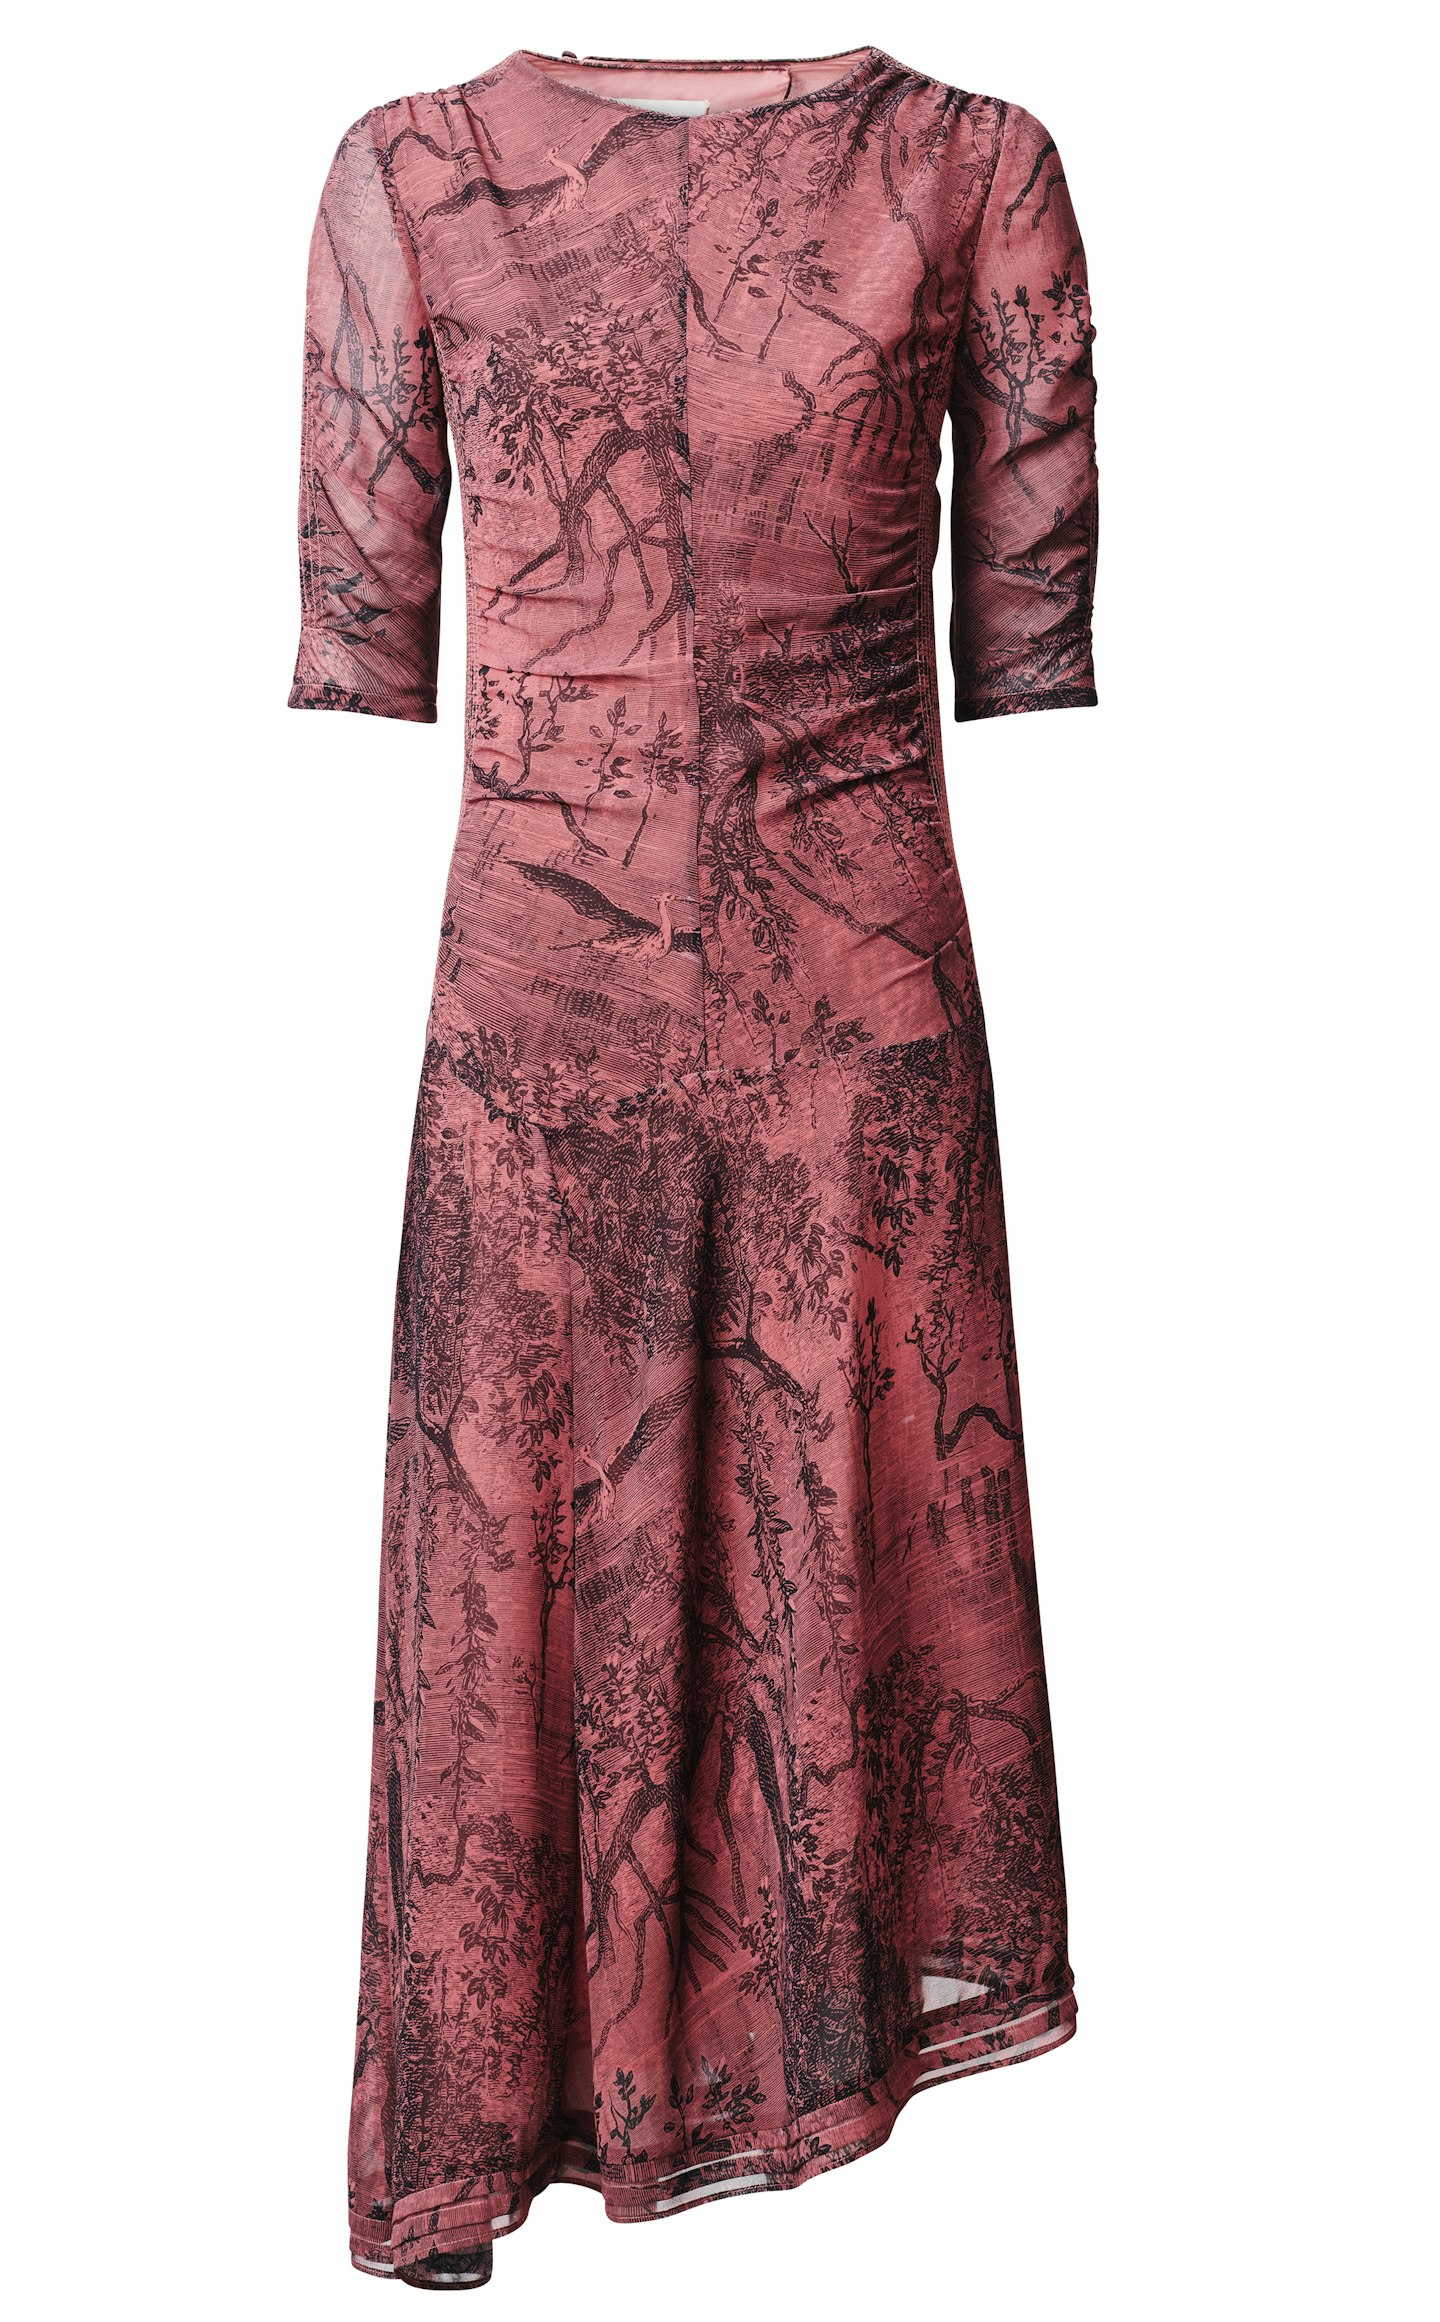 Patterned dress, £69.99